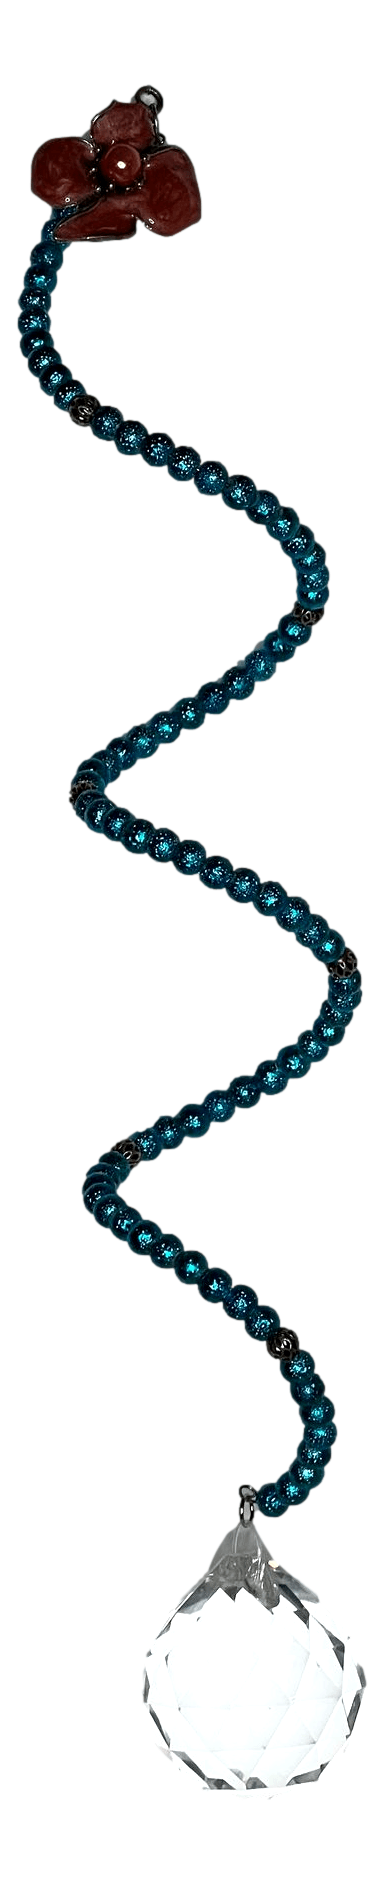 Suncatcher 9 Spiral Design Round Blue Bead Garnet Color Flower Jeweled Parts L:18 Inches Handcrafted By El Paso Artist Nancy - Ysleta Mission Gift Shop- VOTED El Paso's Best Gift Shop